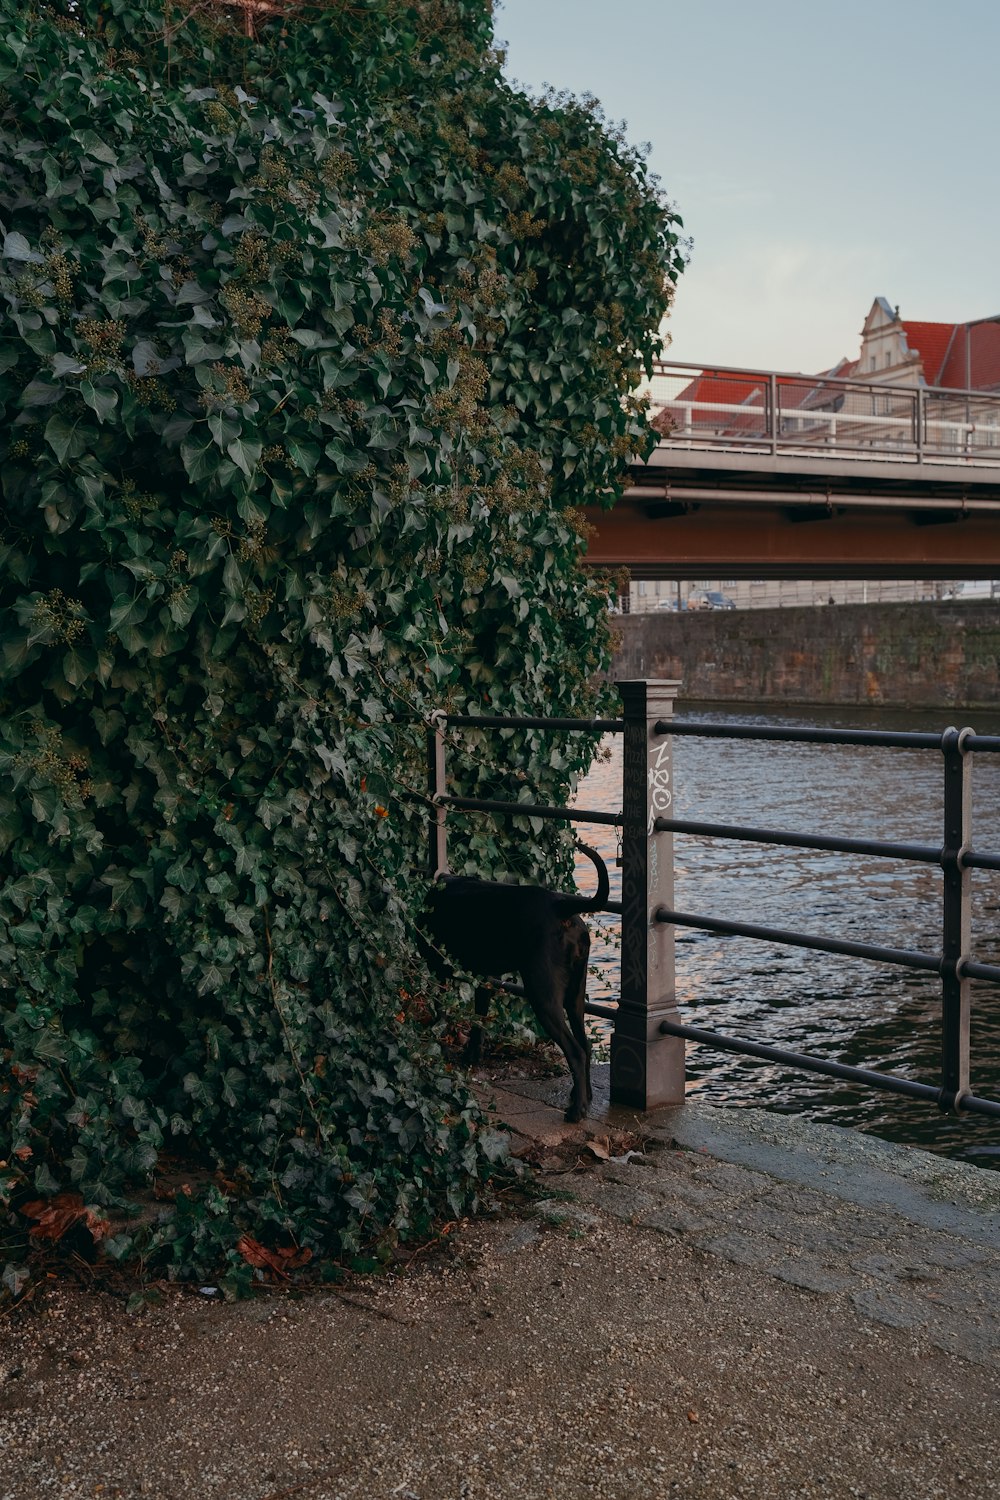 black short coat dog near body of water during daytime